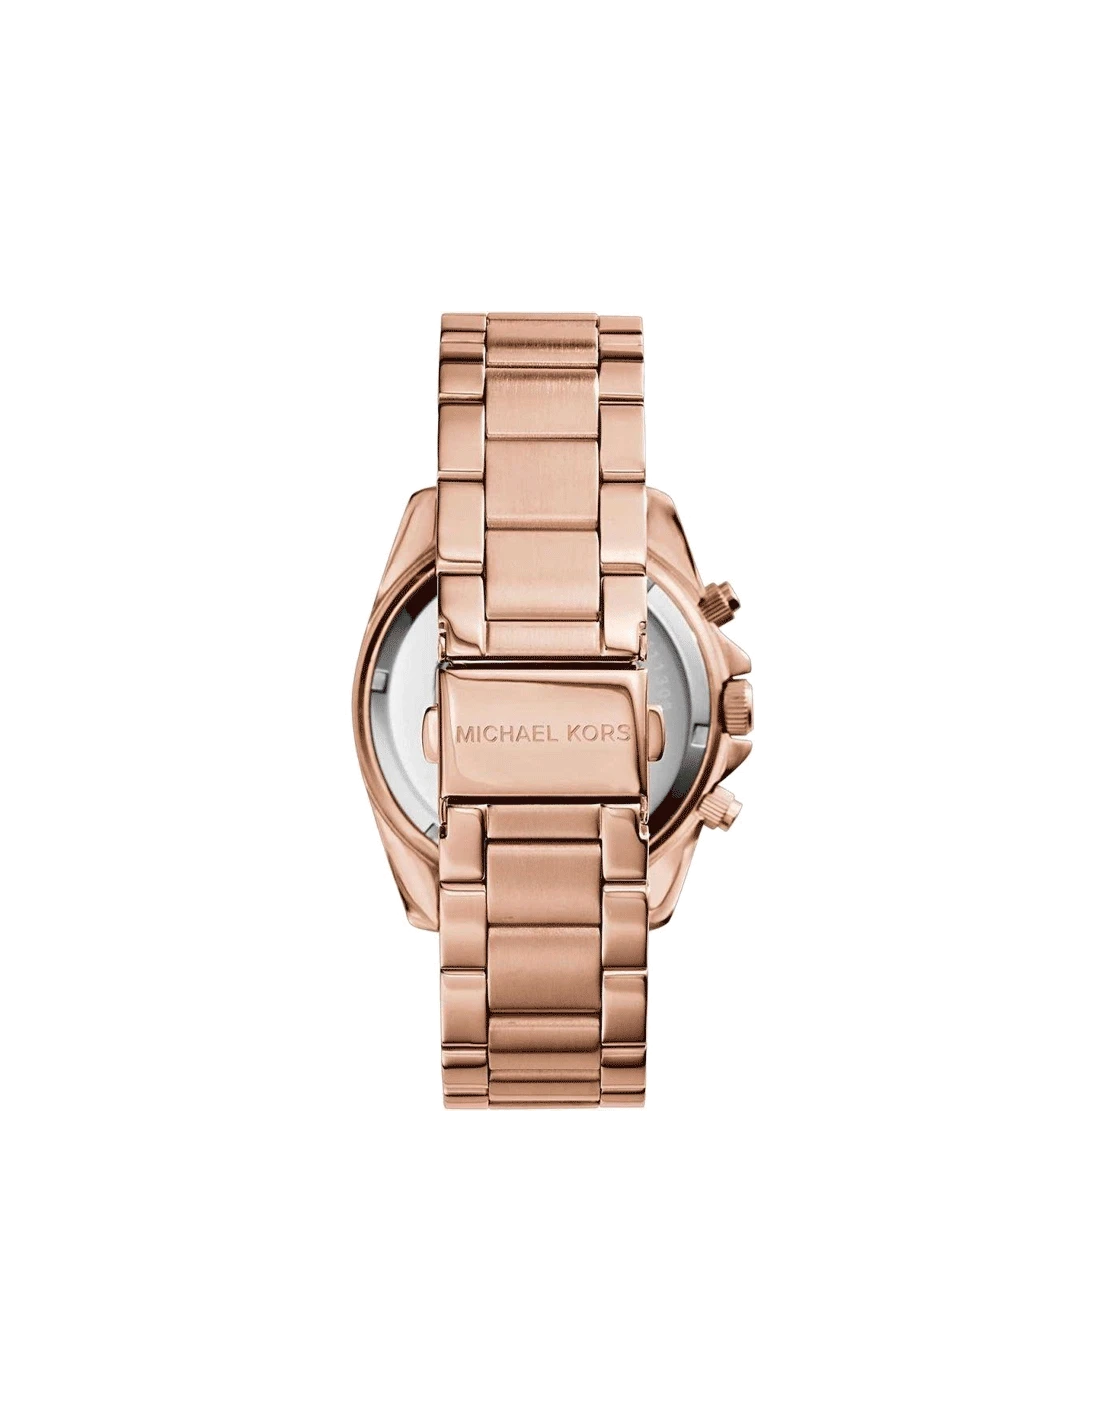 Michael Kors Blair Analog Rose Gold Dial Women's Watch - MK6316 :  Amazon.in: Fashion